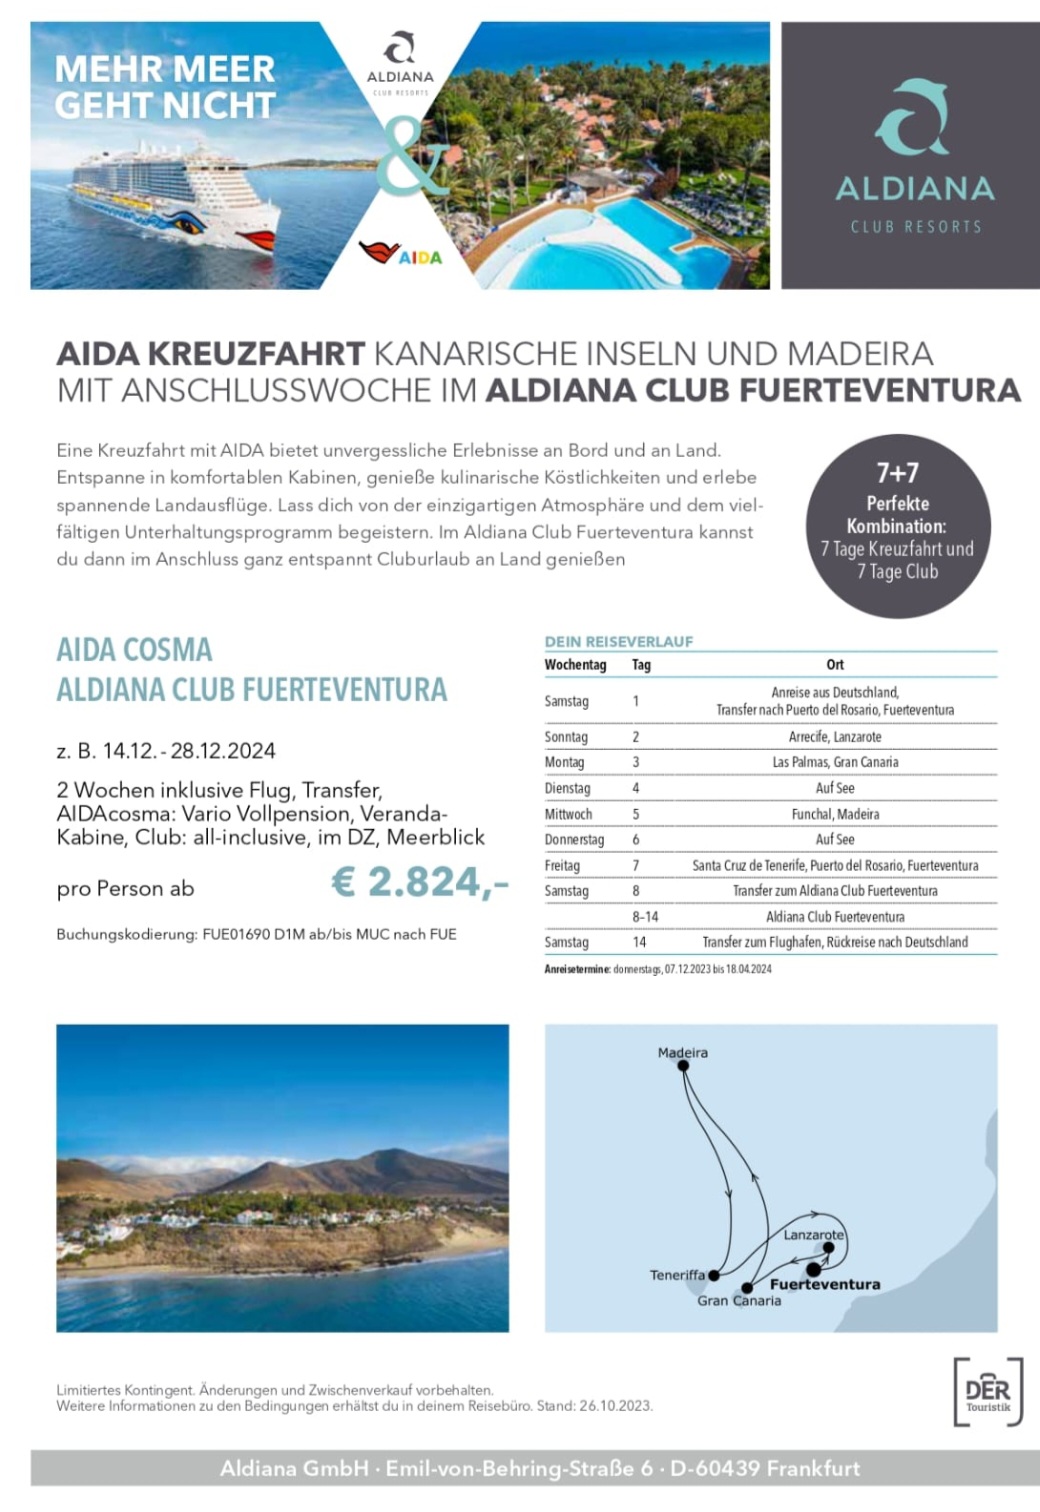 AIDAcosma - Club Aldiana Fuerteventura